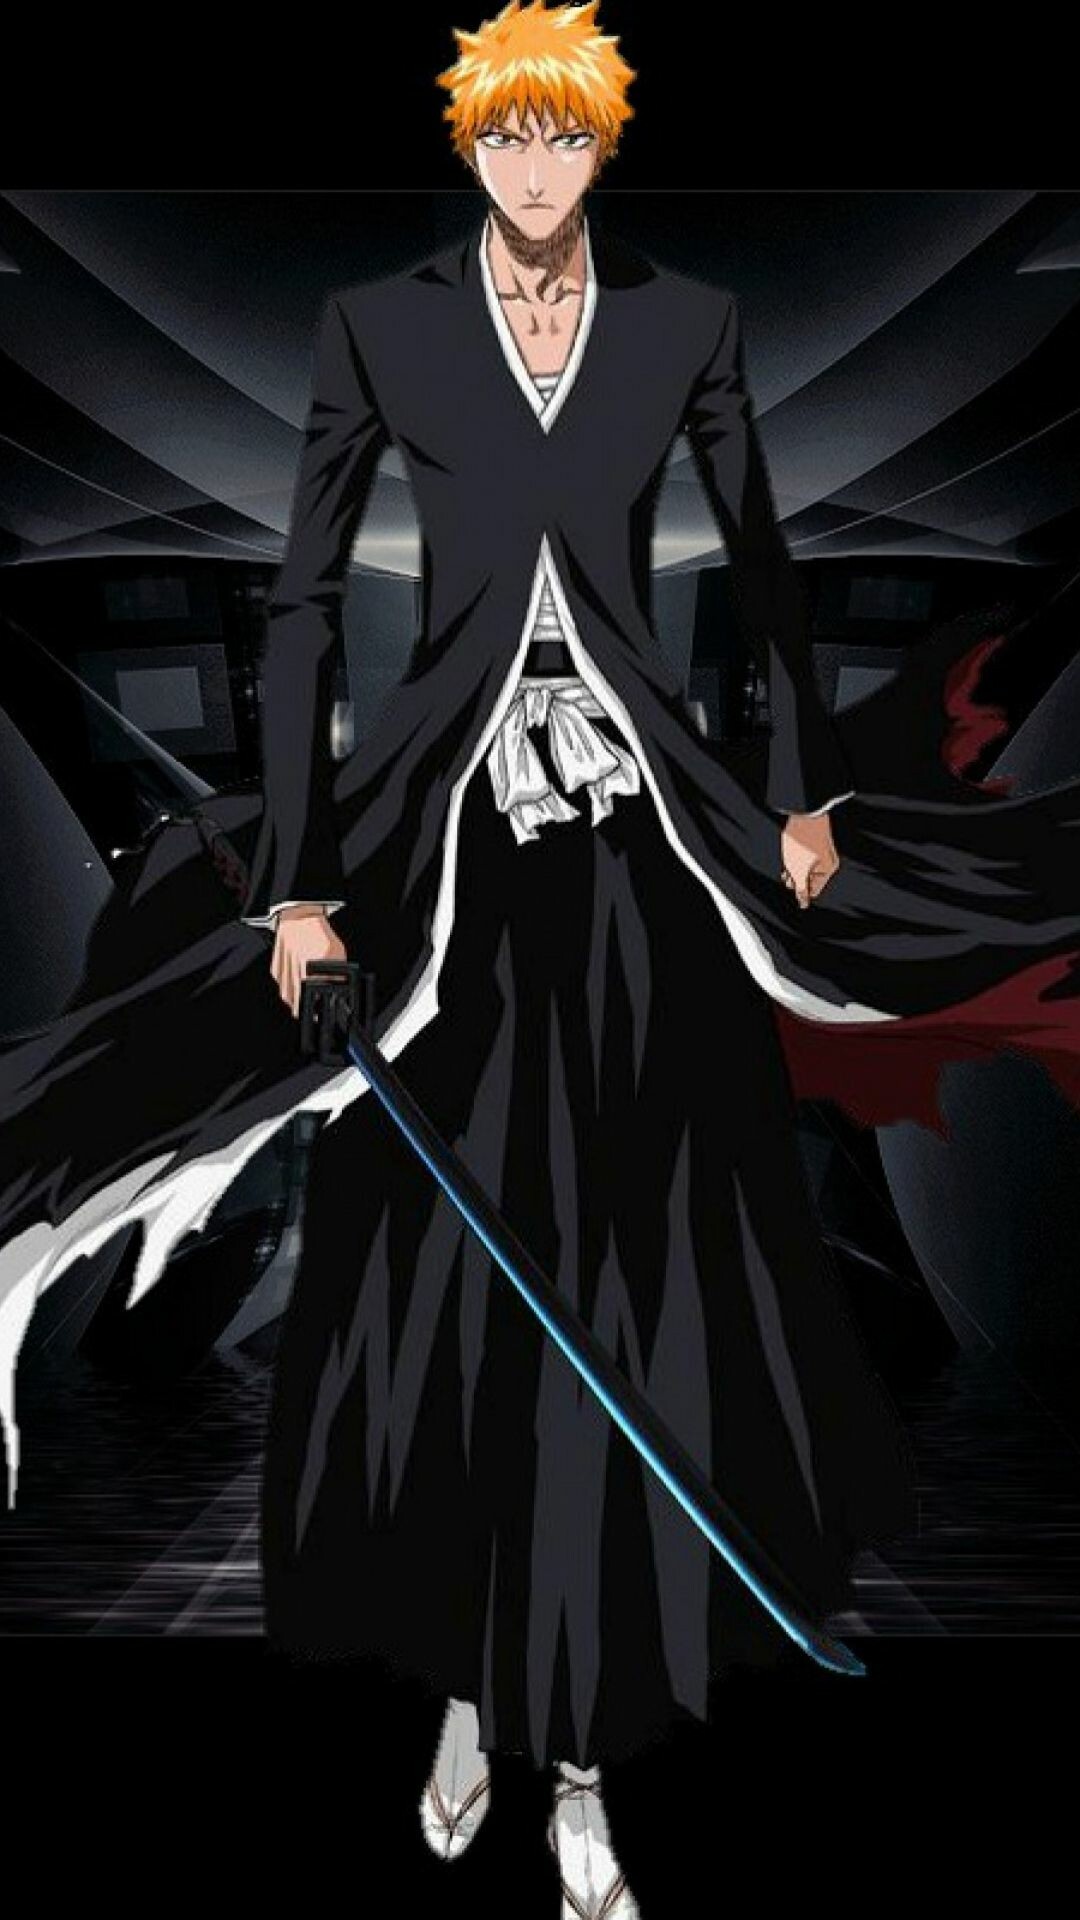 Bleach: Ichigo Kurosaki, the main protagonist of the series, who receives Soul Reaper powers. 1080x1920 Full HD Background.